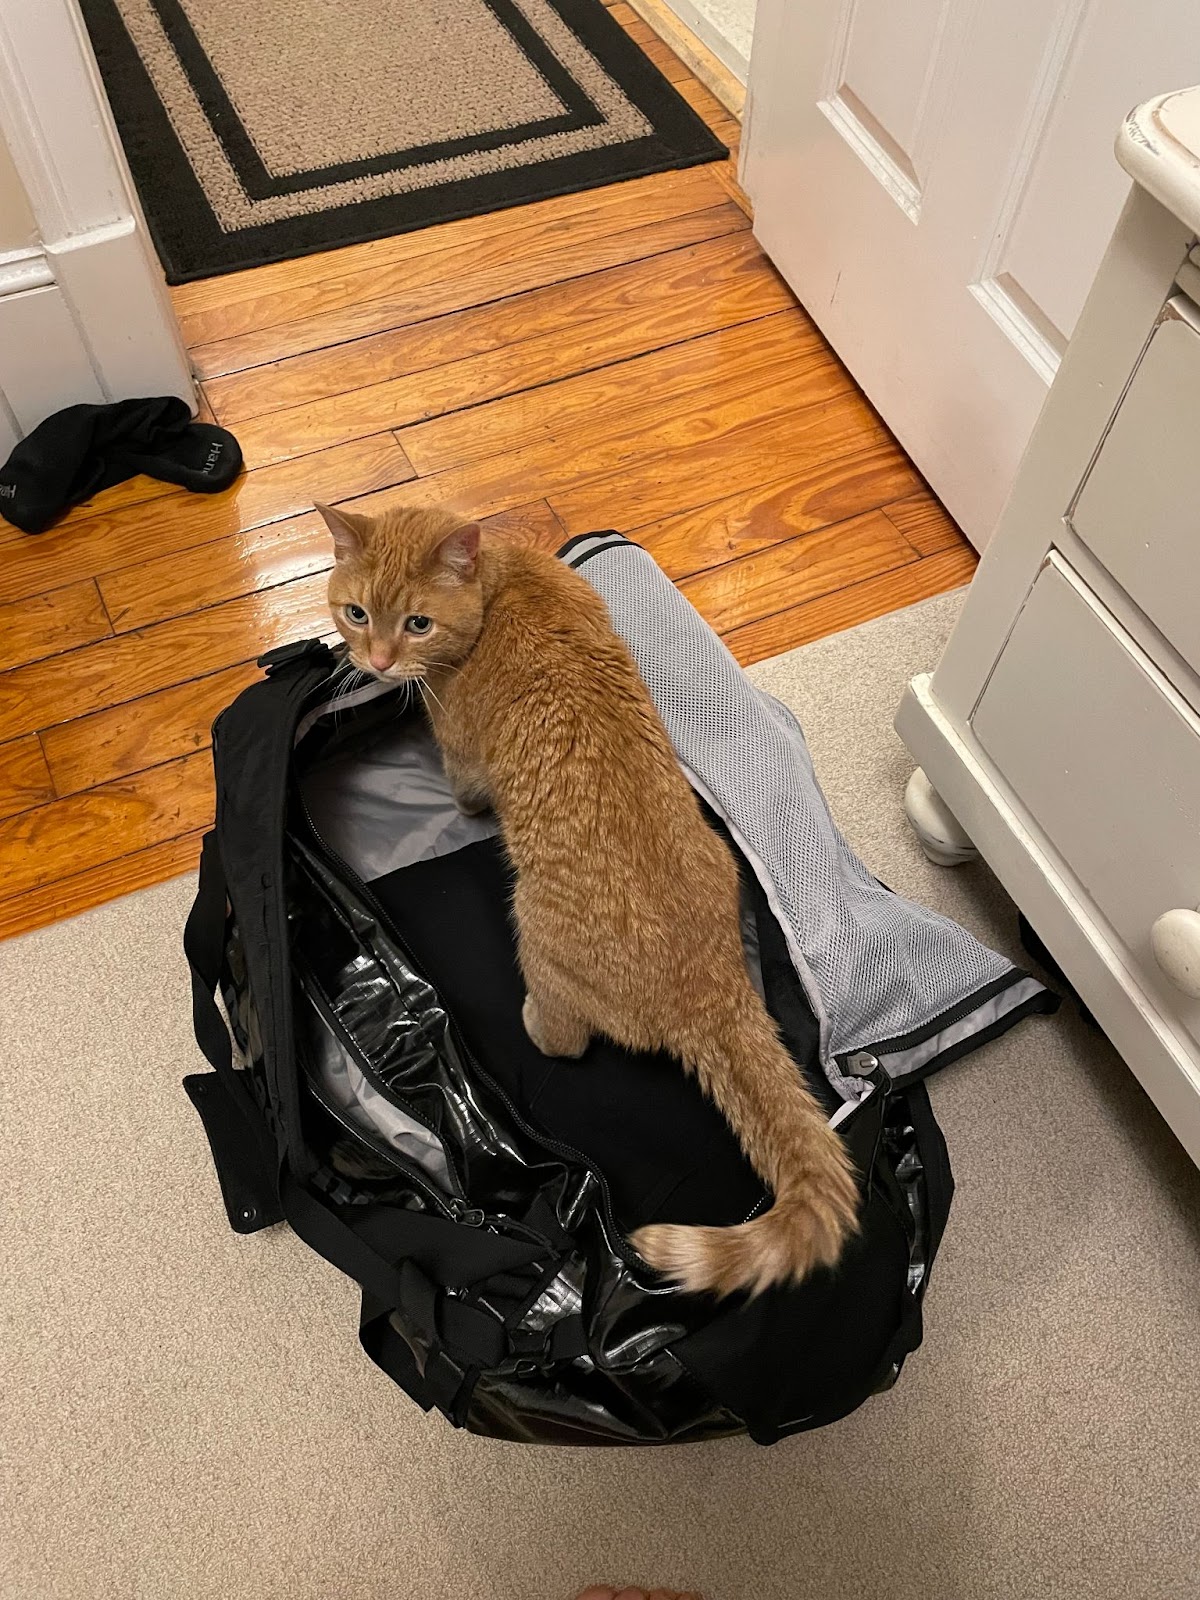 Laura's cat, Tarzan, in a suitcase.